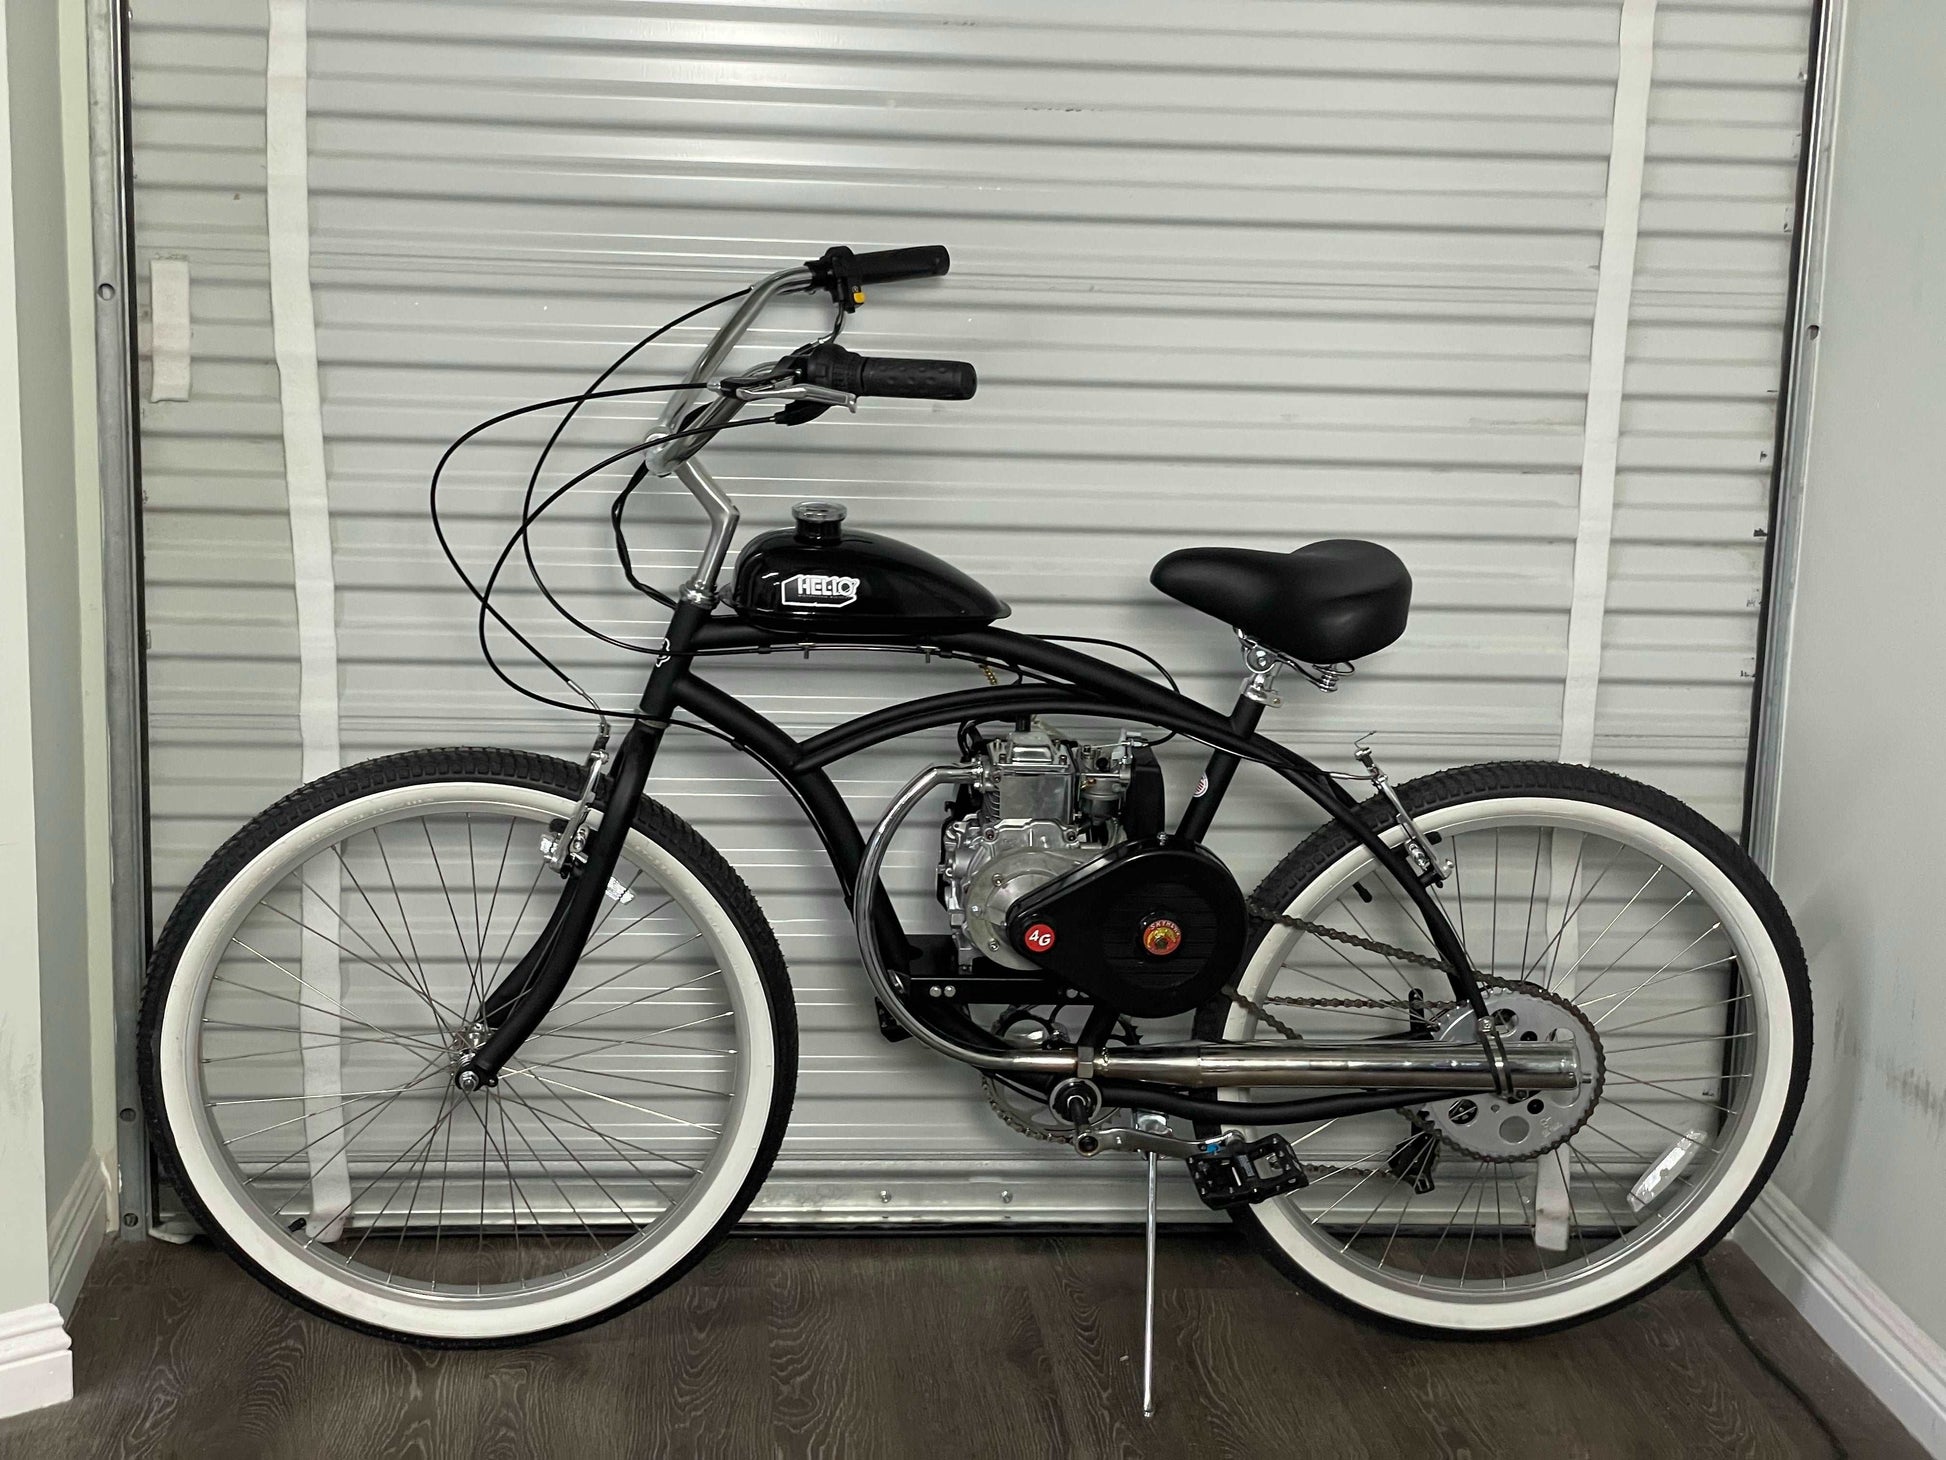 Basic 4G Motorized Bicycle Available Now!